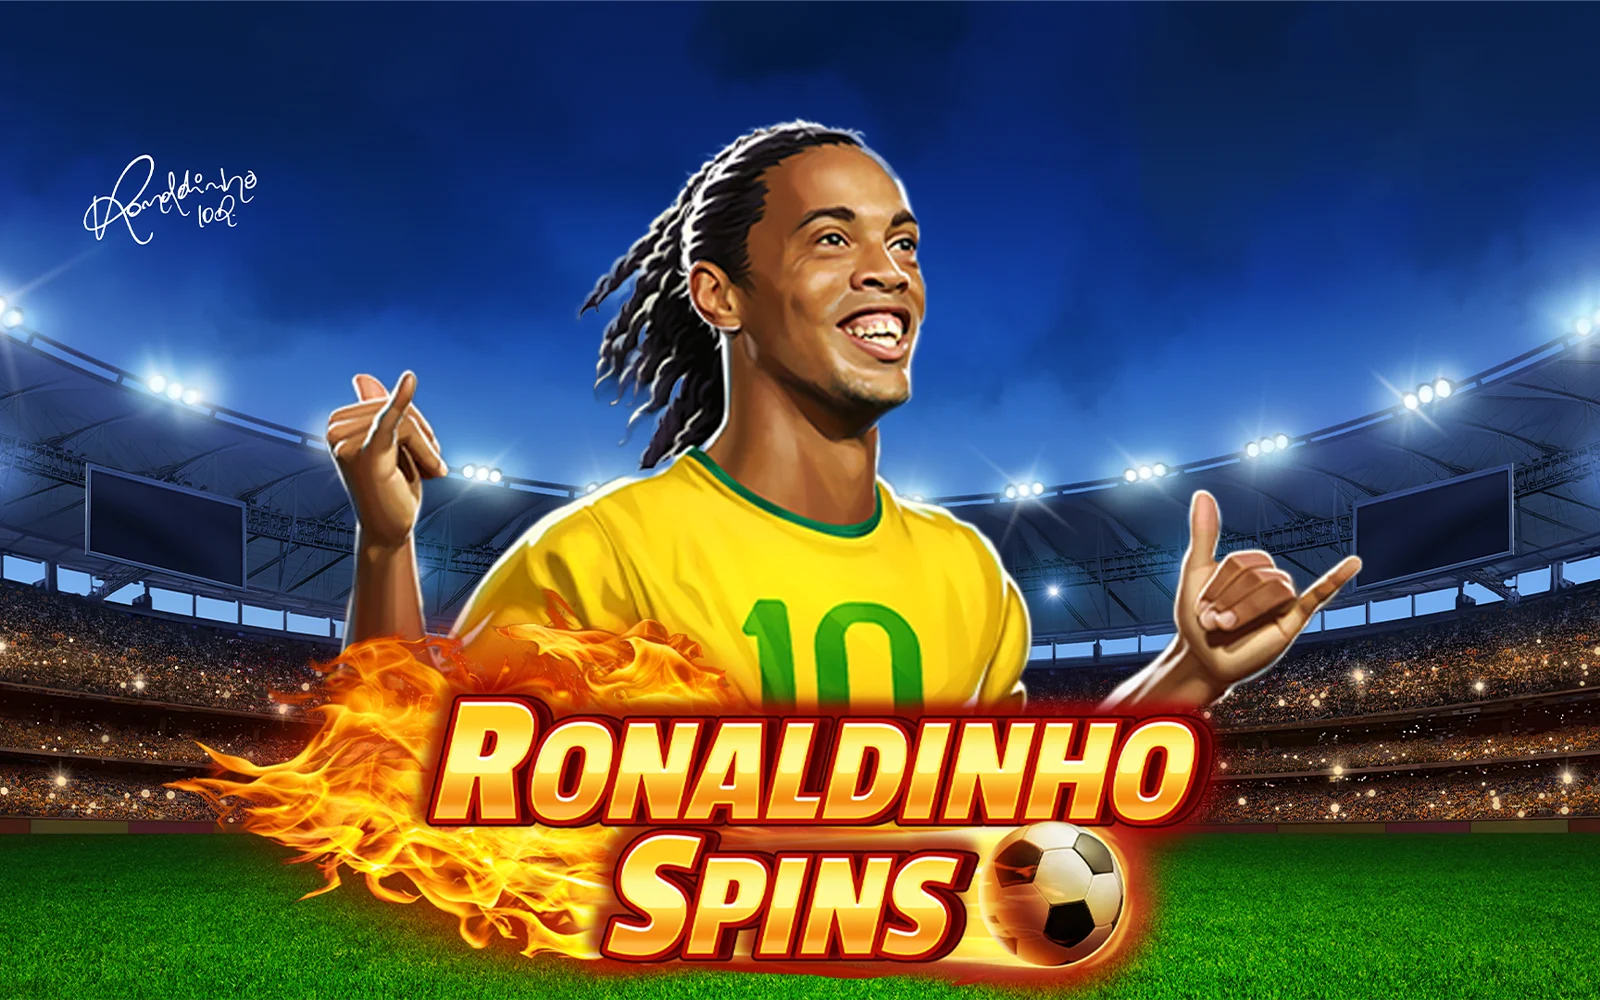 Play Ronaldinho Spins on Starcasino.be online casino